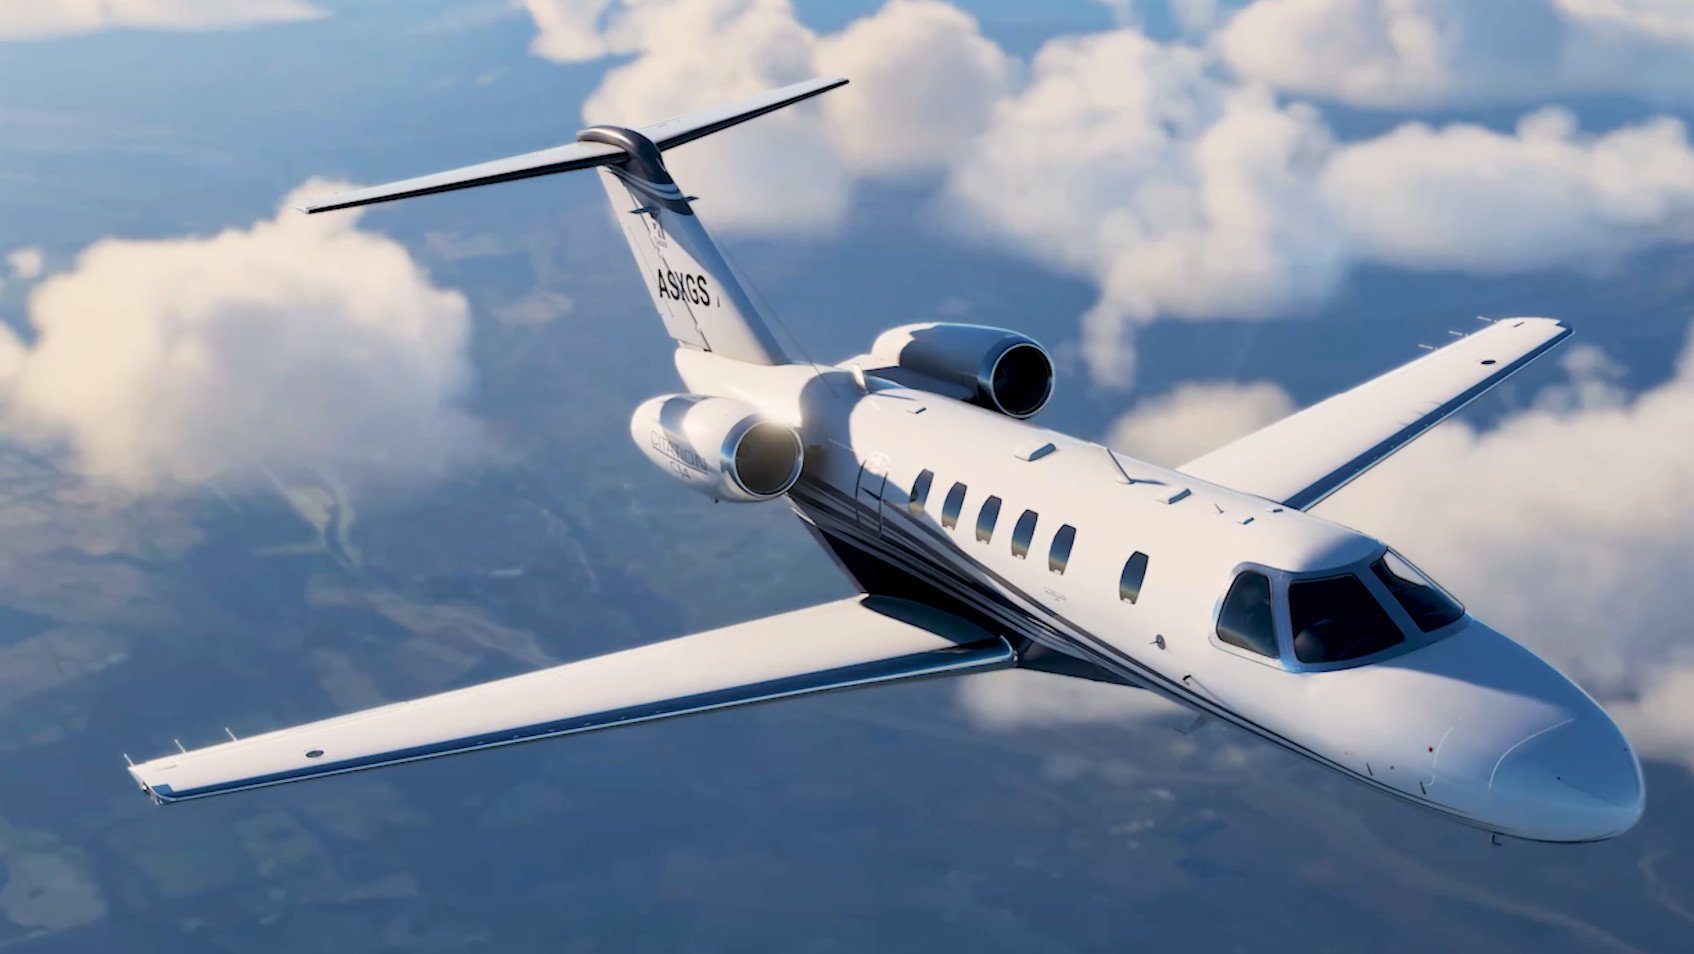 List Of Microsoft Flight Simulator 2020 Planes And Aircraft Windows Central